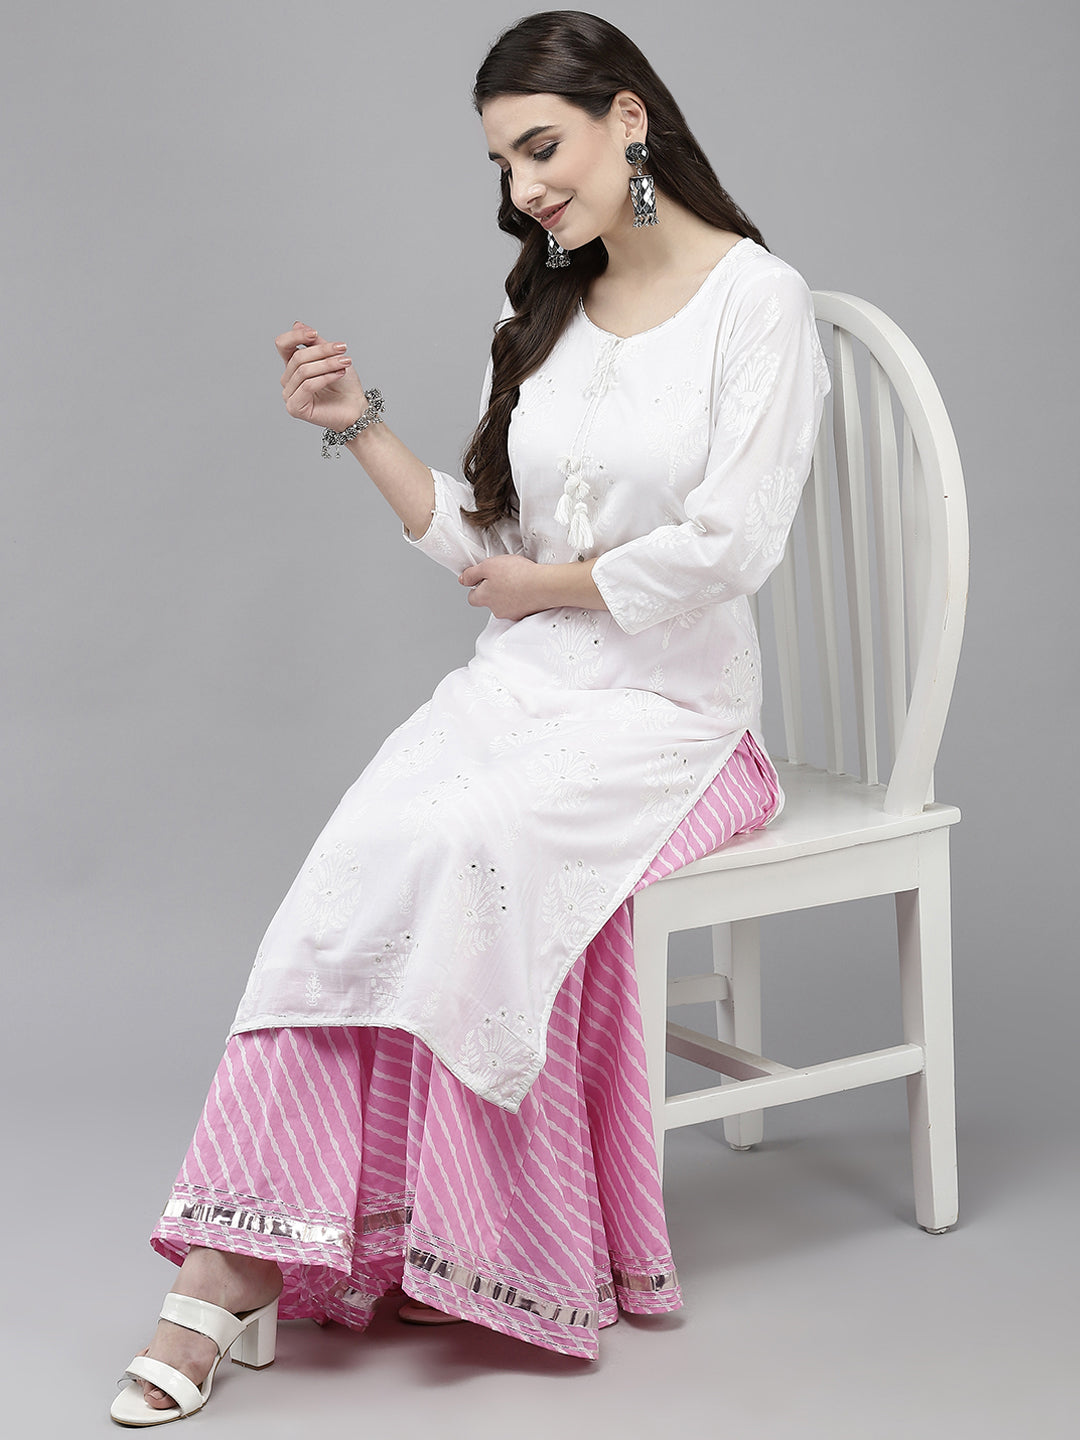 Women's White & Pink Embroidered A-Line Kurta With Sharara - Navyaa